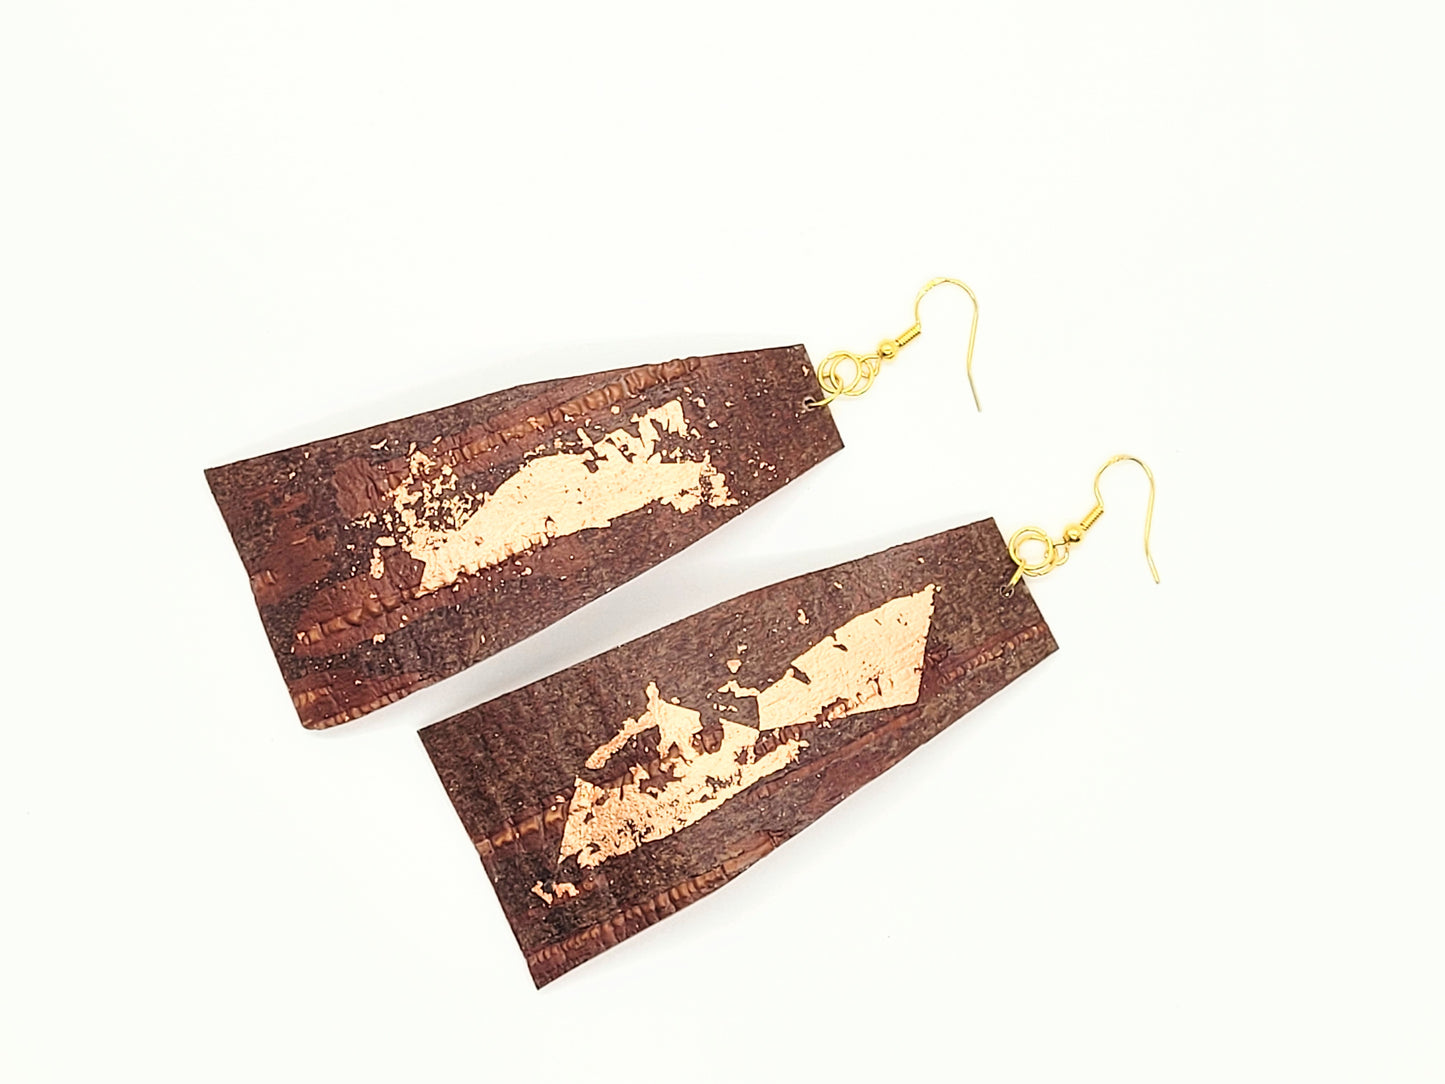 NEW DESIGN! Large birch bark earrings made with 14K gold plated earring hooks, copper design